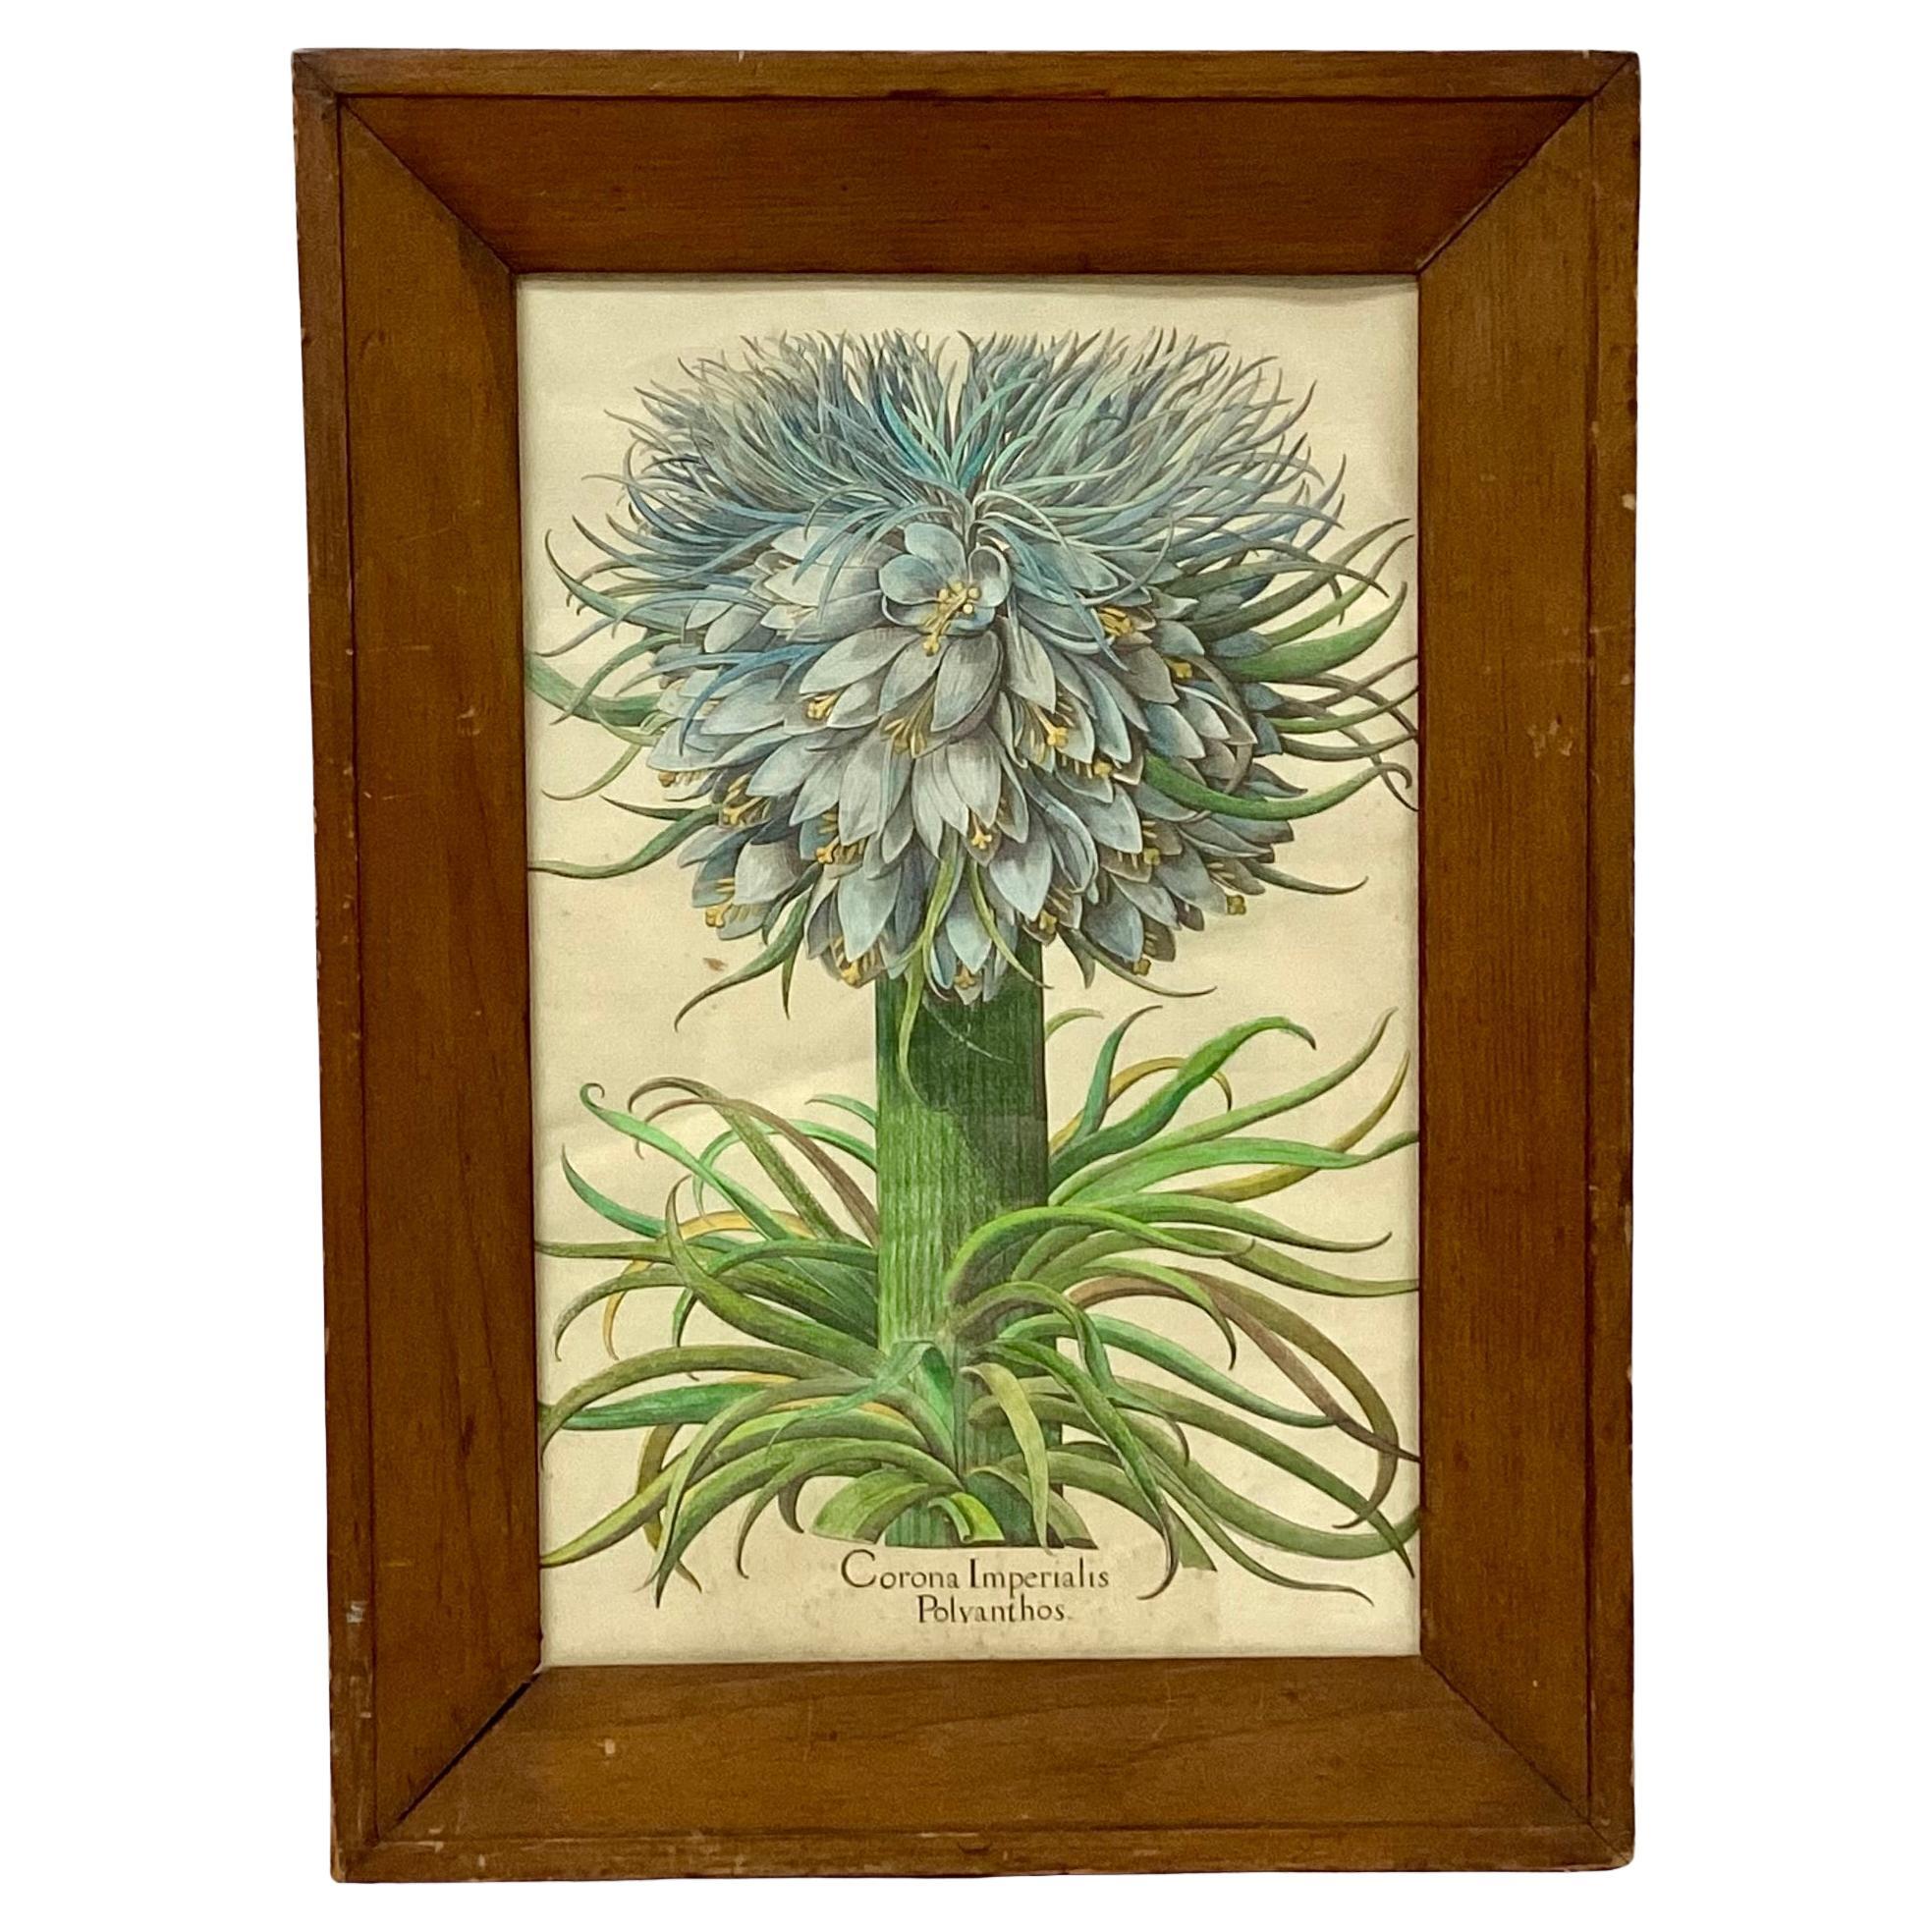 Paper Botanical Print, Corona Imperialis Polvanthus, After Basil Besler For Sale